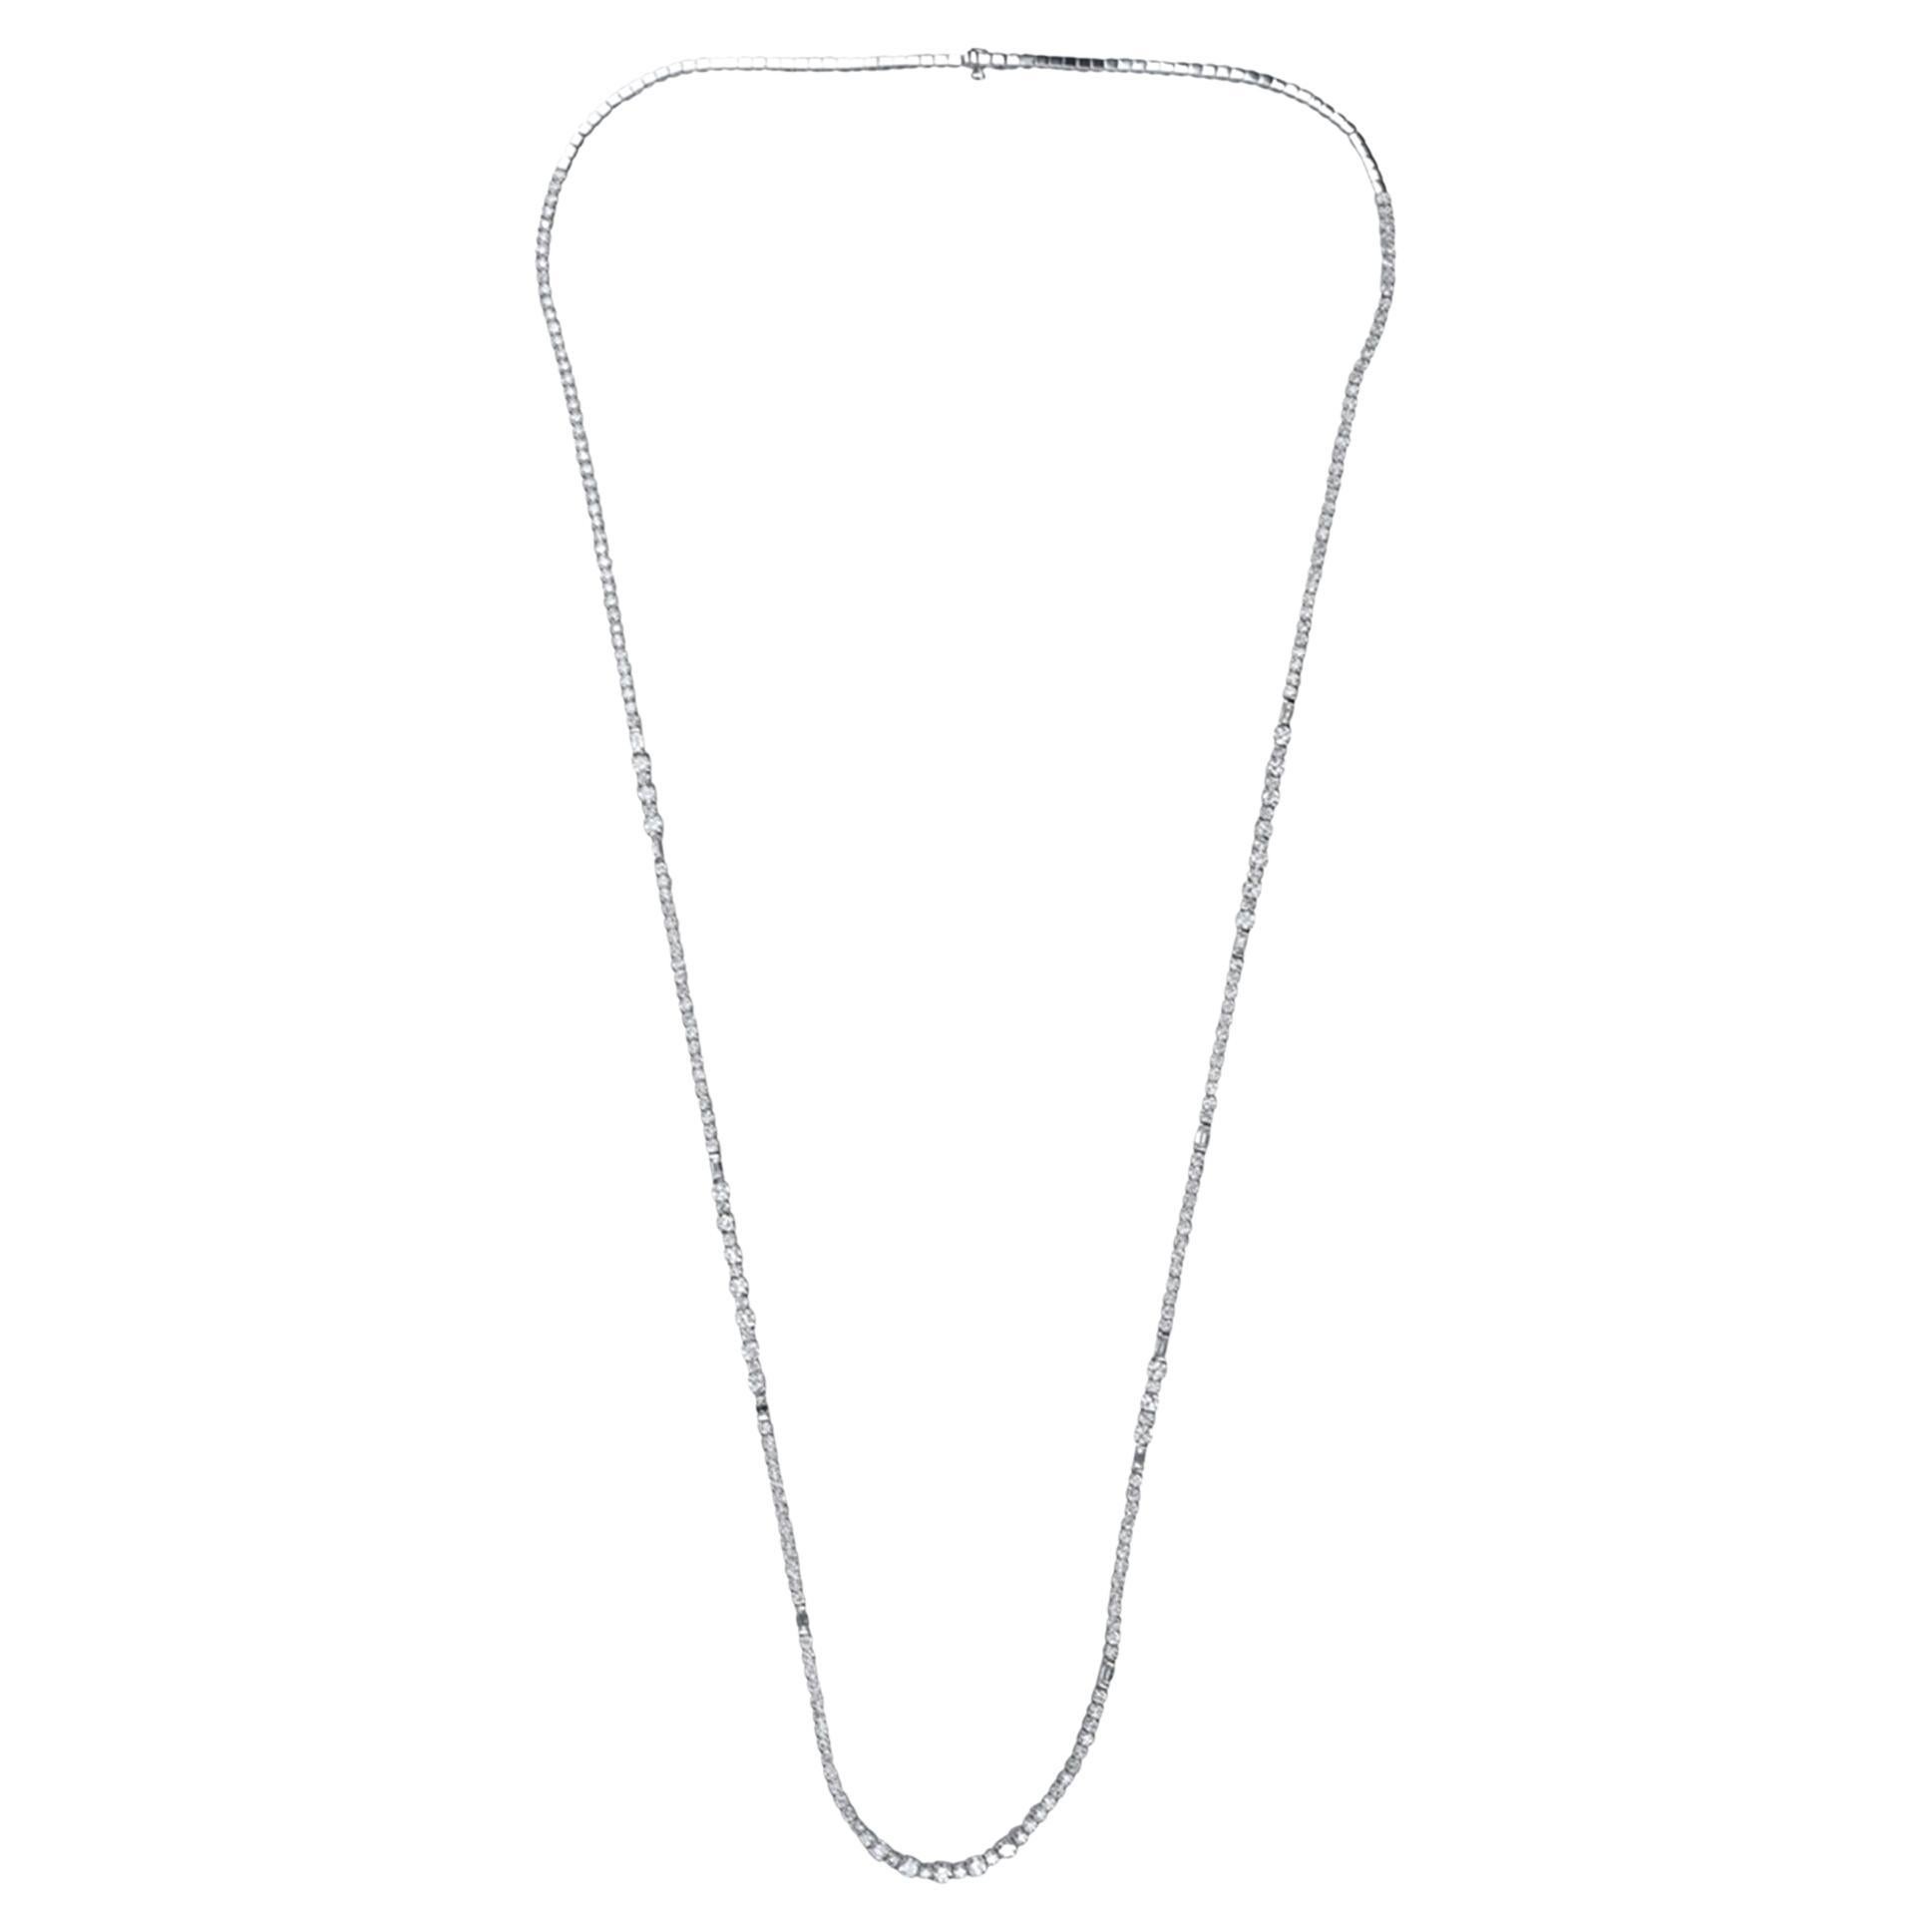 8.42 Carat SI Clarity HI Color Diamond Tennis Chain Necklace 18 Karat White Gold For Sale